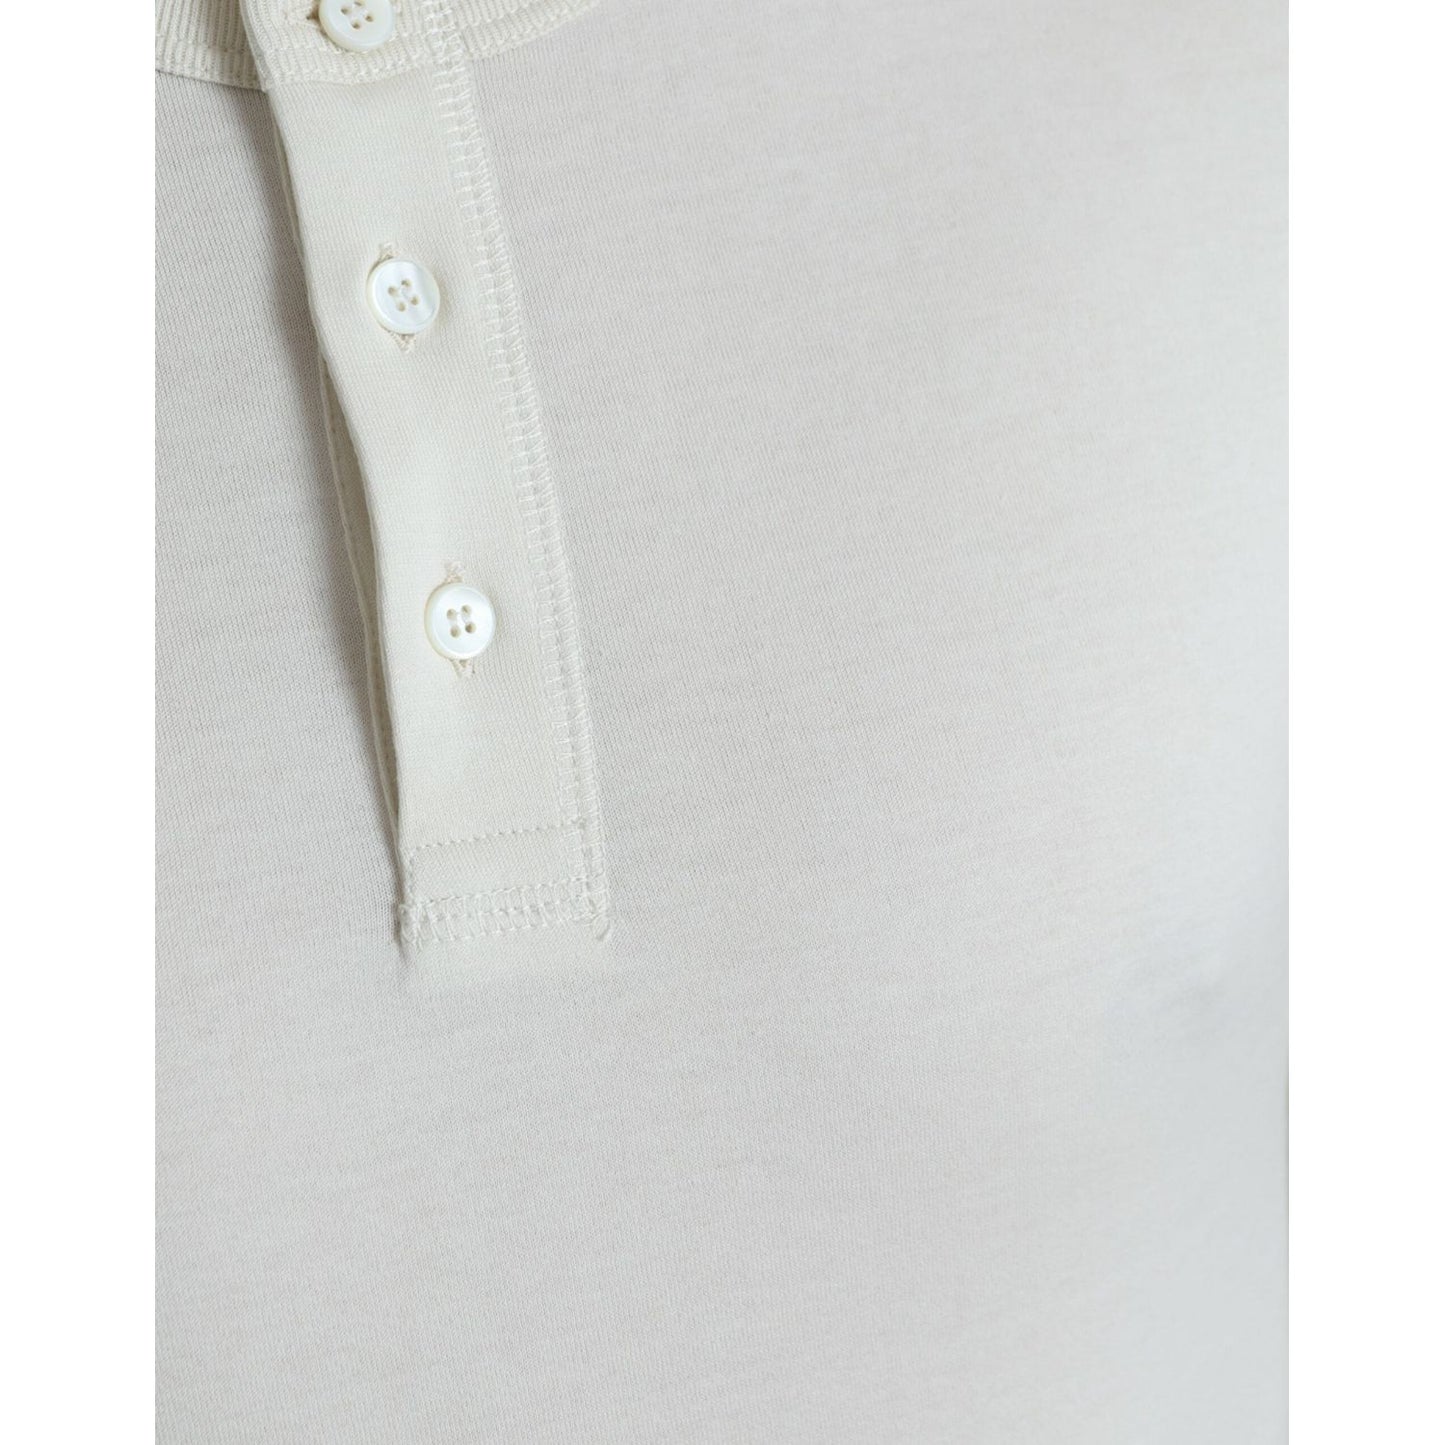 Dolce & Gabbana Elegant Off White Cotton Sweater off-white-cotton-henley-pullover-sweater